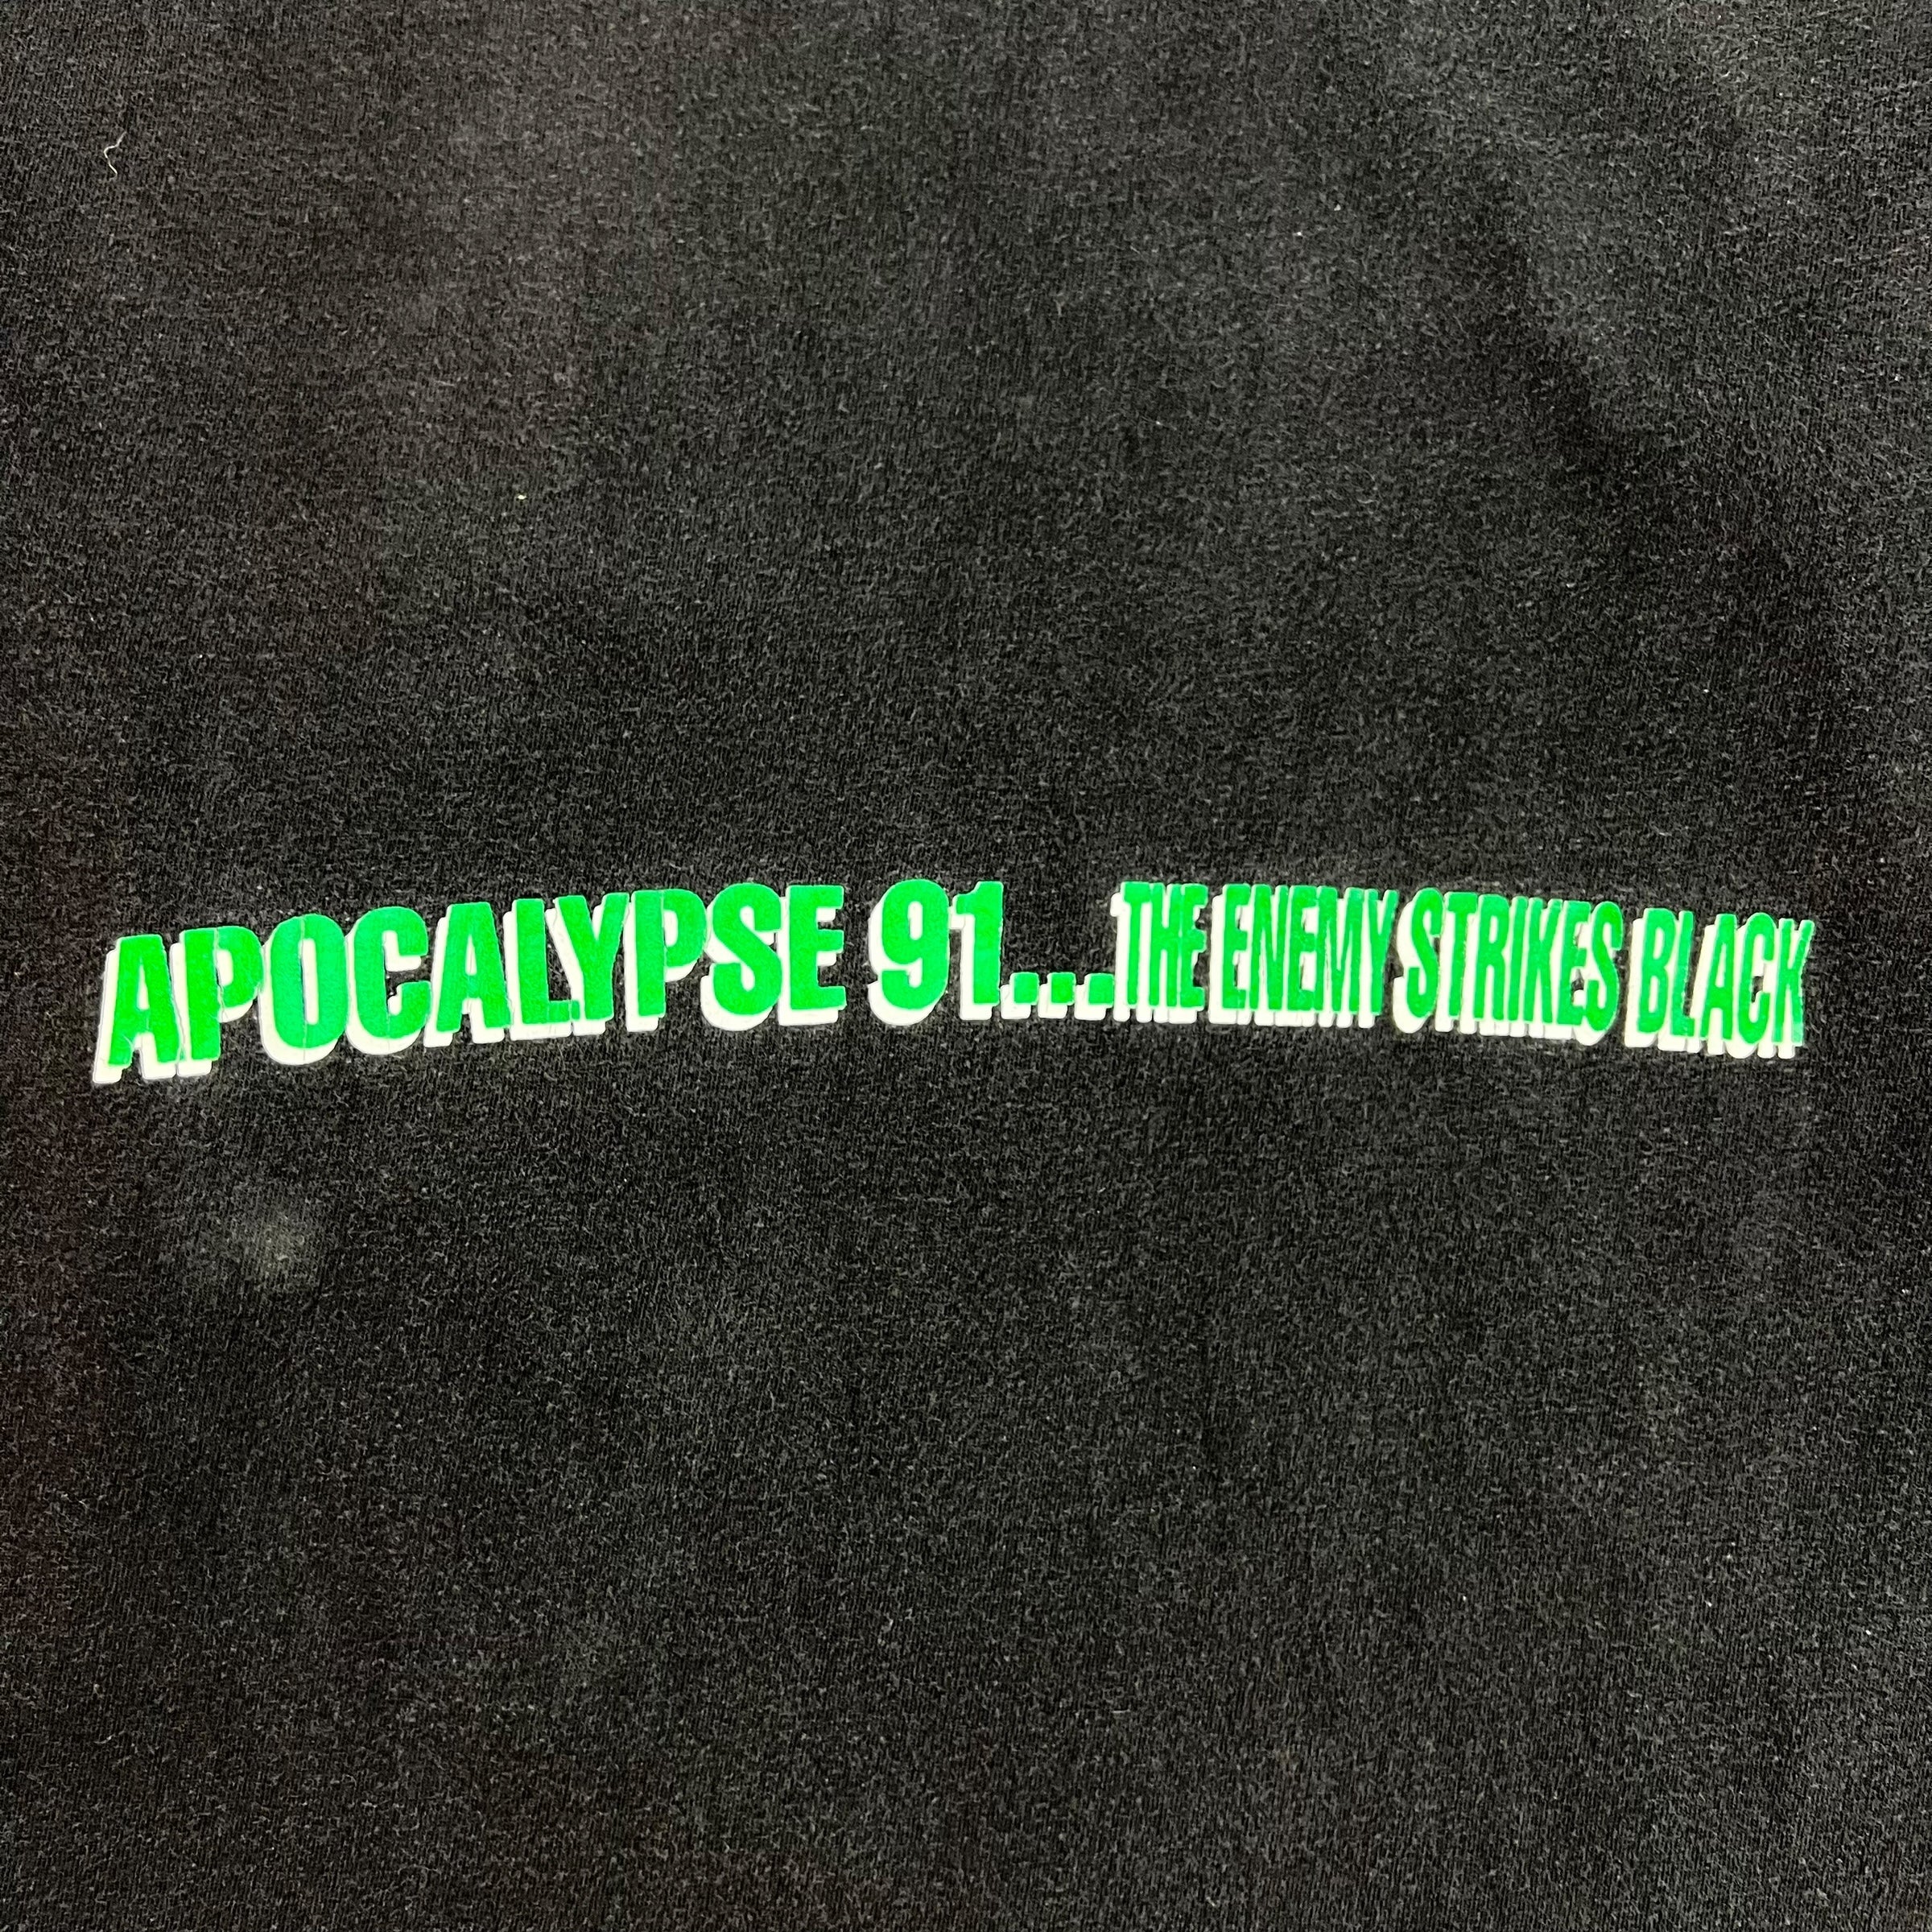 Vintage Public Enemy Black Apocalypse 91 Longsleeve Shirt